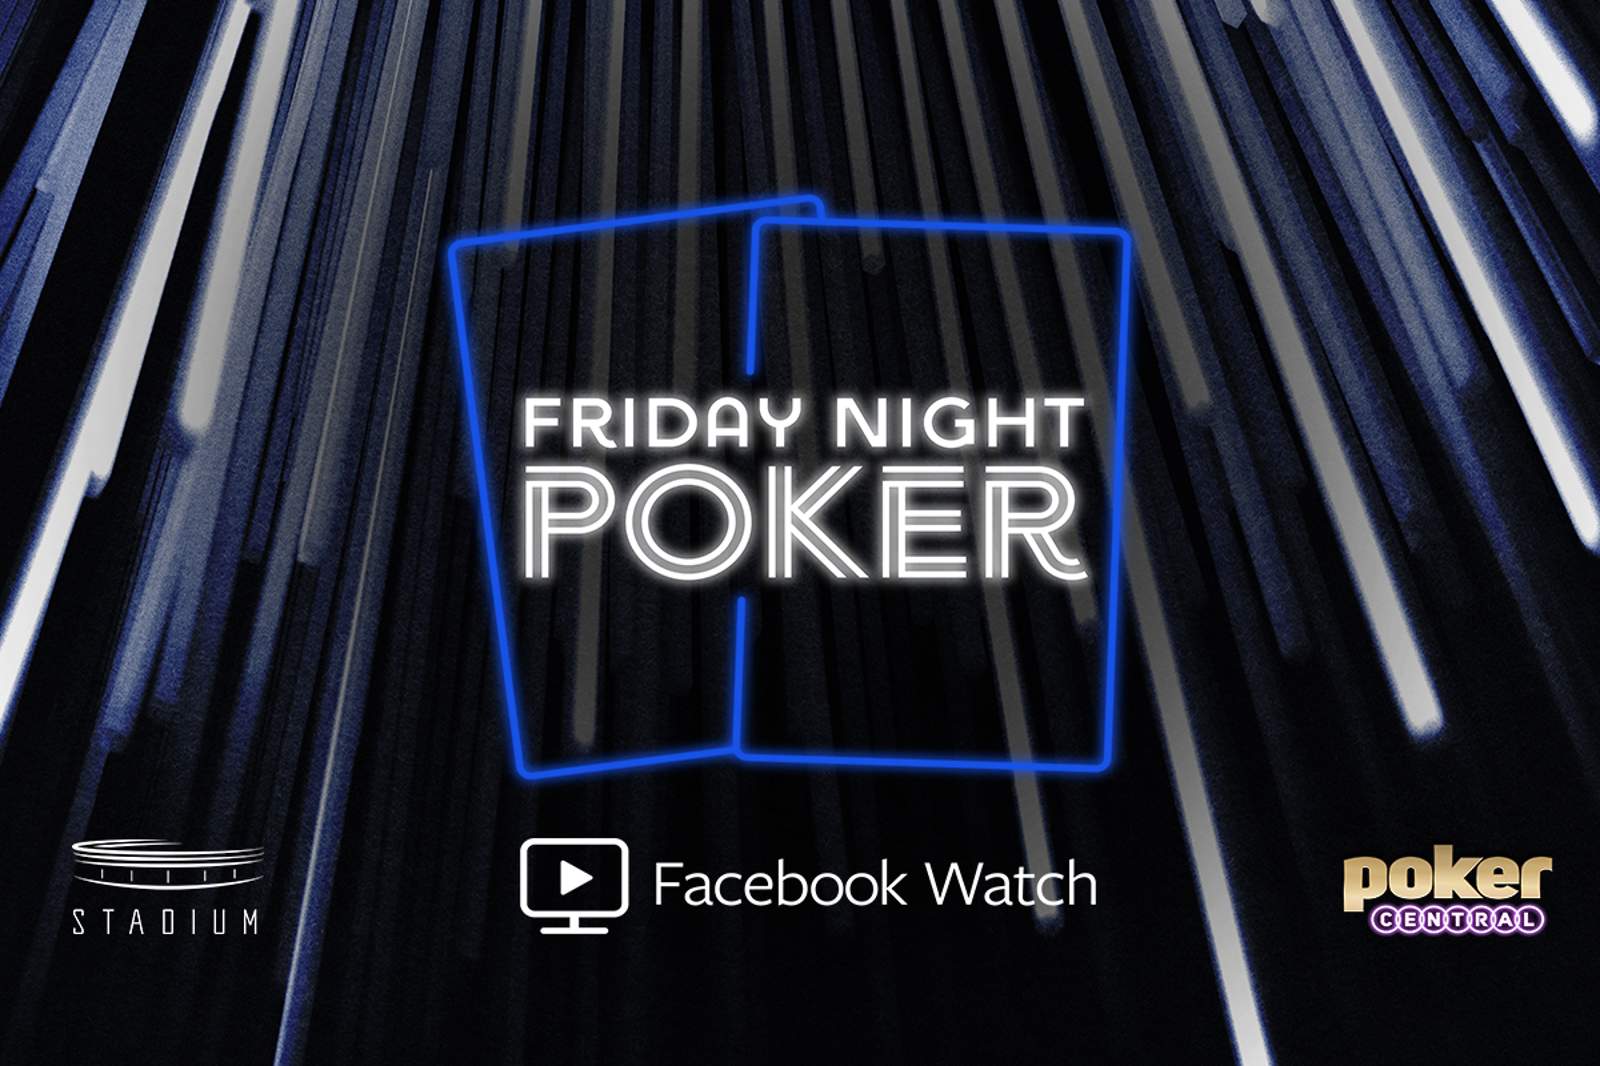 "Friday Night Poker" Week 2 Live on Facebook Watch